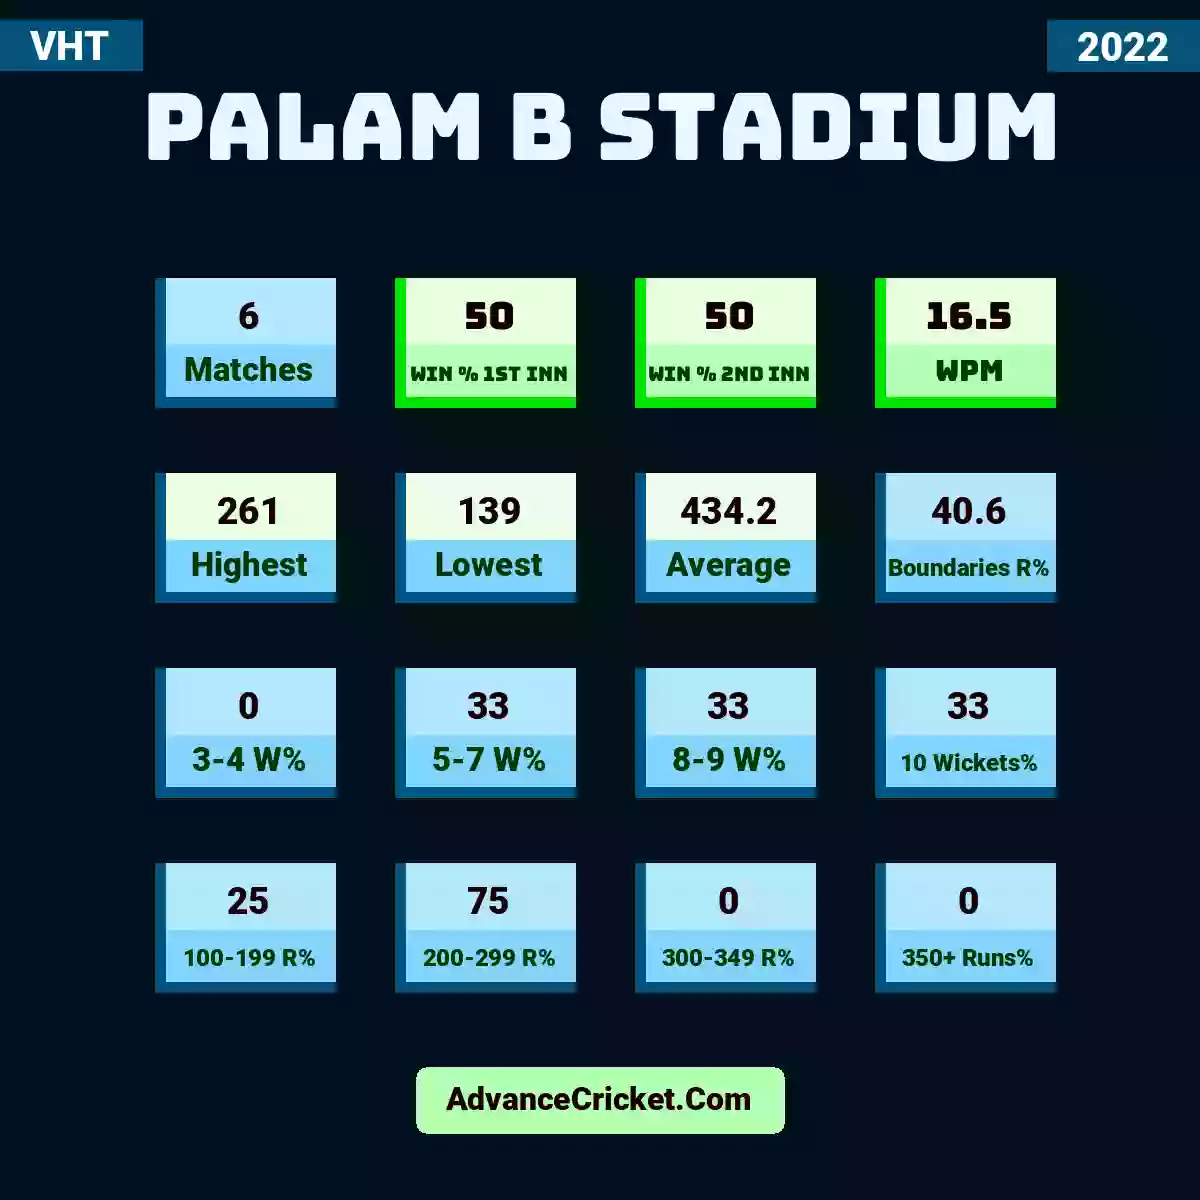 Image showing Palam B Stadium with Matches: 6, Win % 1st Inn: 50, Win % 2nd Inn: 50, WPM: 16.5, Highest: 261, Lowest: 139, Average: 434.2, Boundaries R%: 40.6, 3-4 W%: 0, 5-7 W%: 33, 8-9 W%: 33, 10 Wickets%: 33, 100-199 R%: 25, 200-299 R%: 75, 300-349 R%: 0, 350+ Runs%: 0.